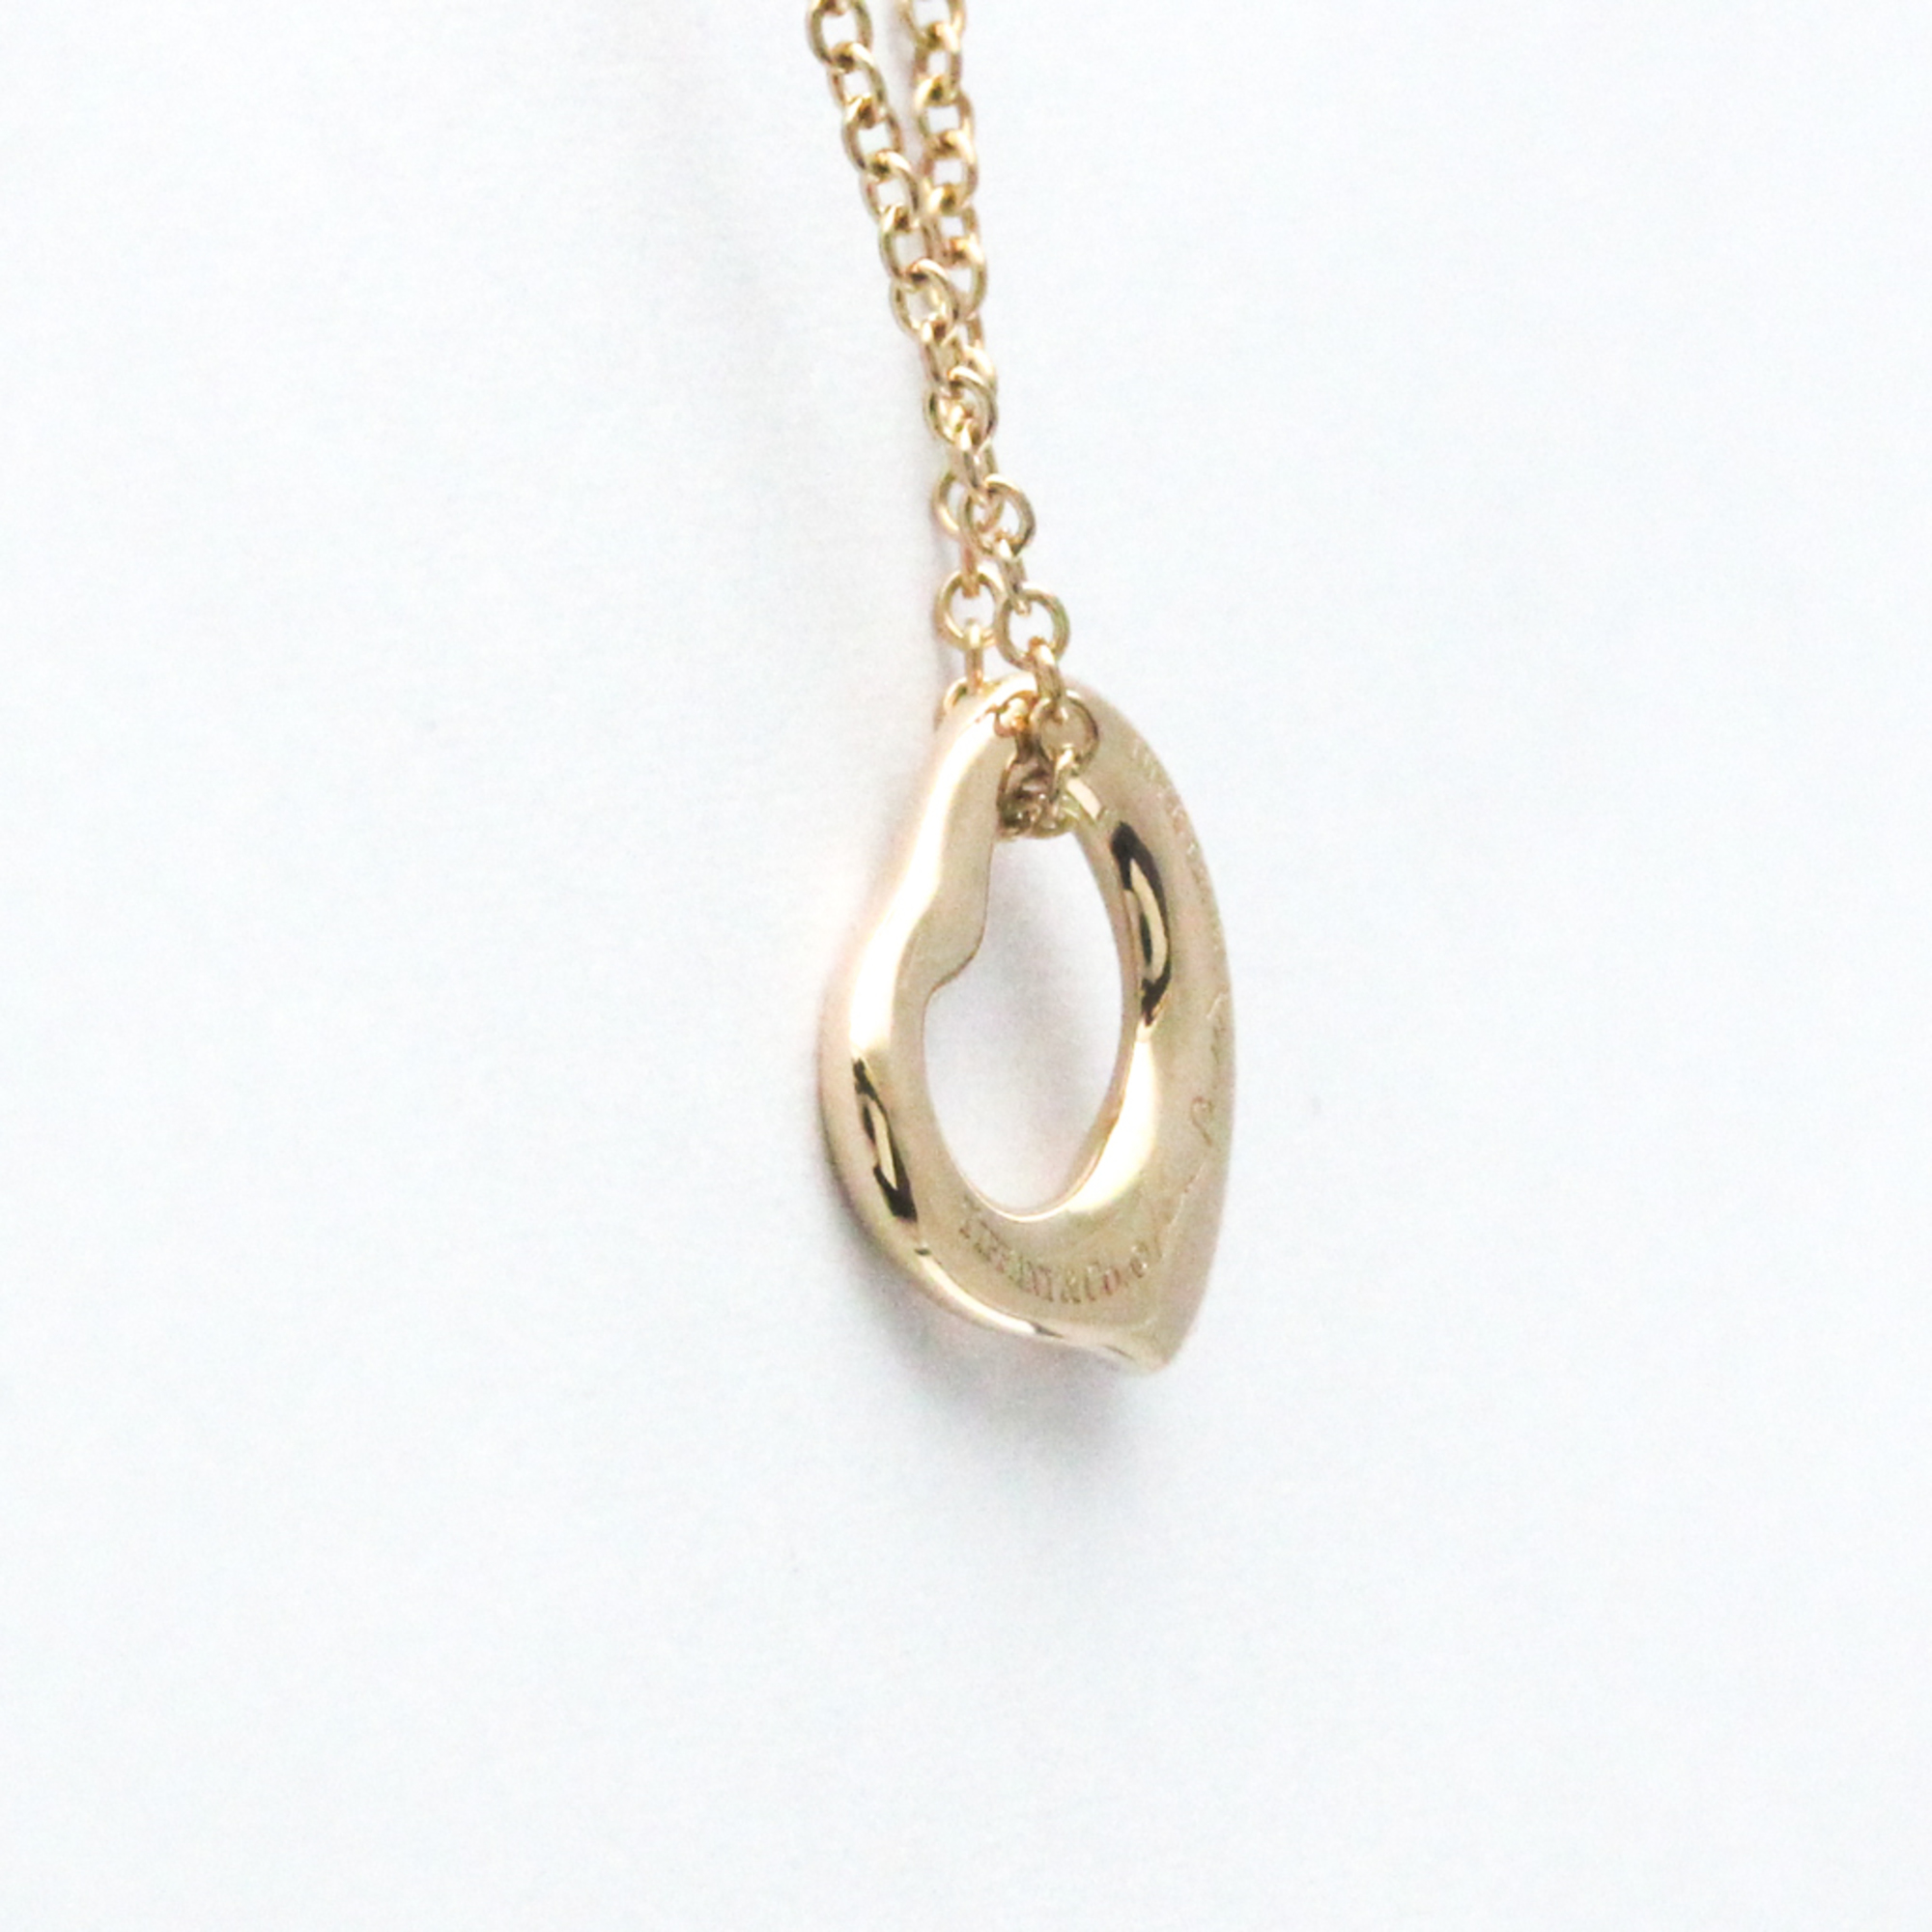 Tiffany Open Heart Pink Gold (18K) No Stone Women's Fashion Pendant Necklace